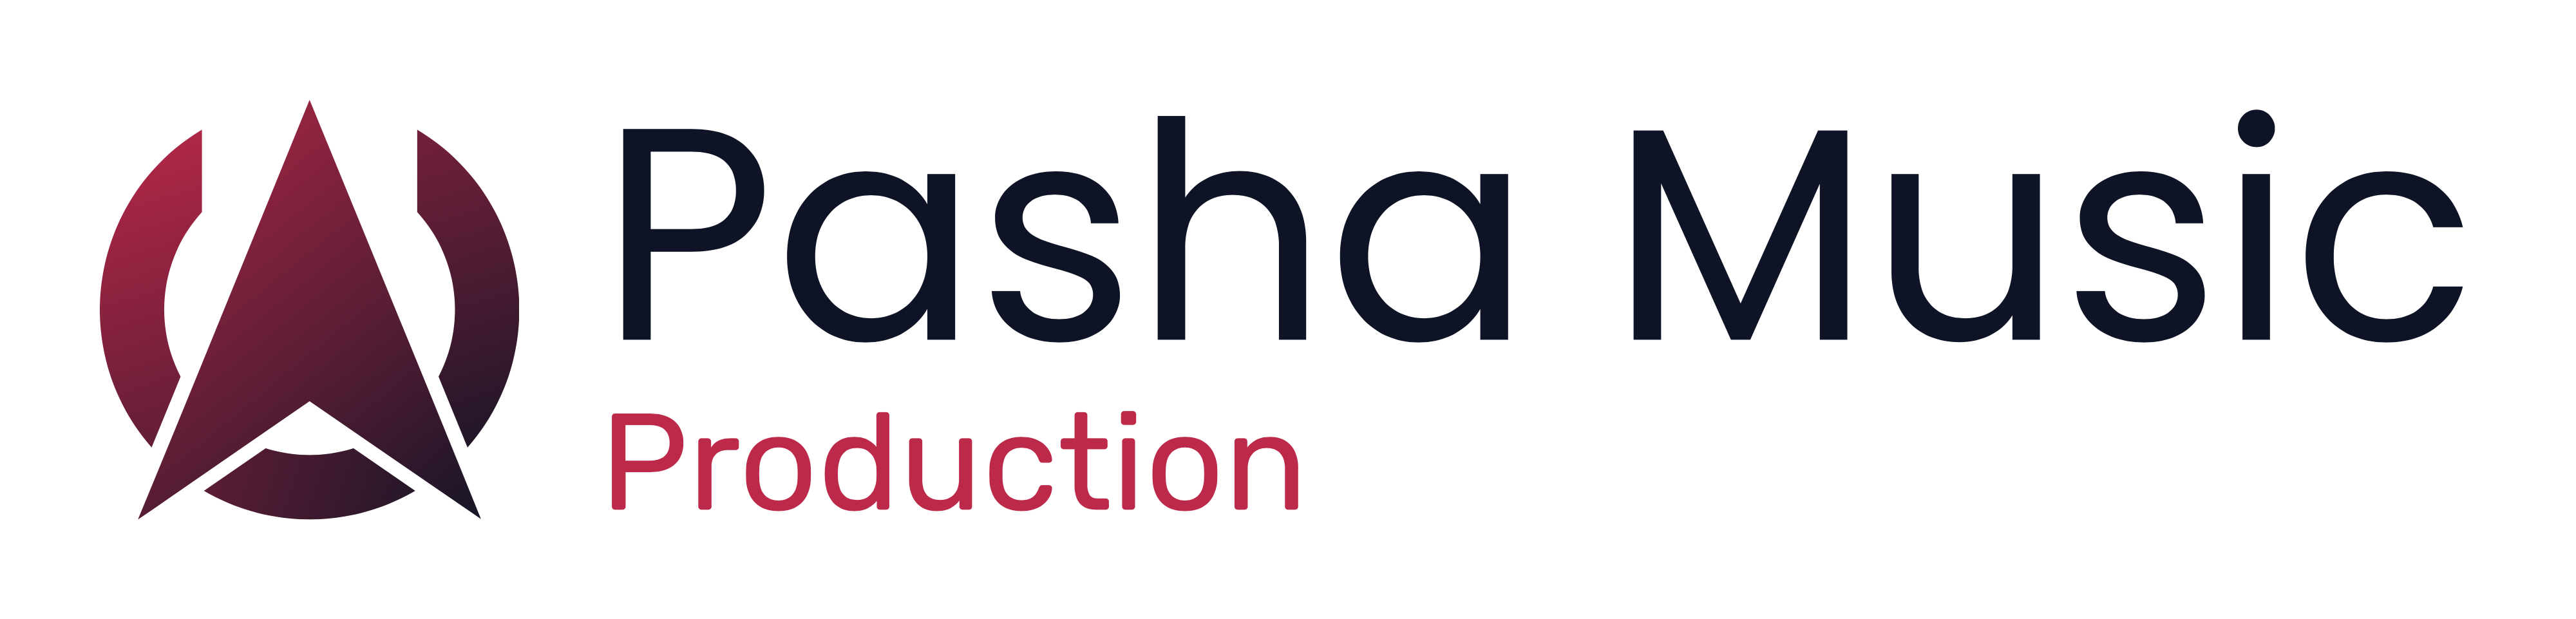 Pasha Music Production 